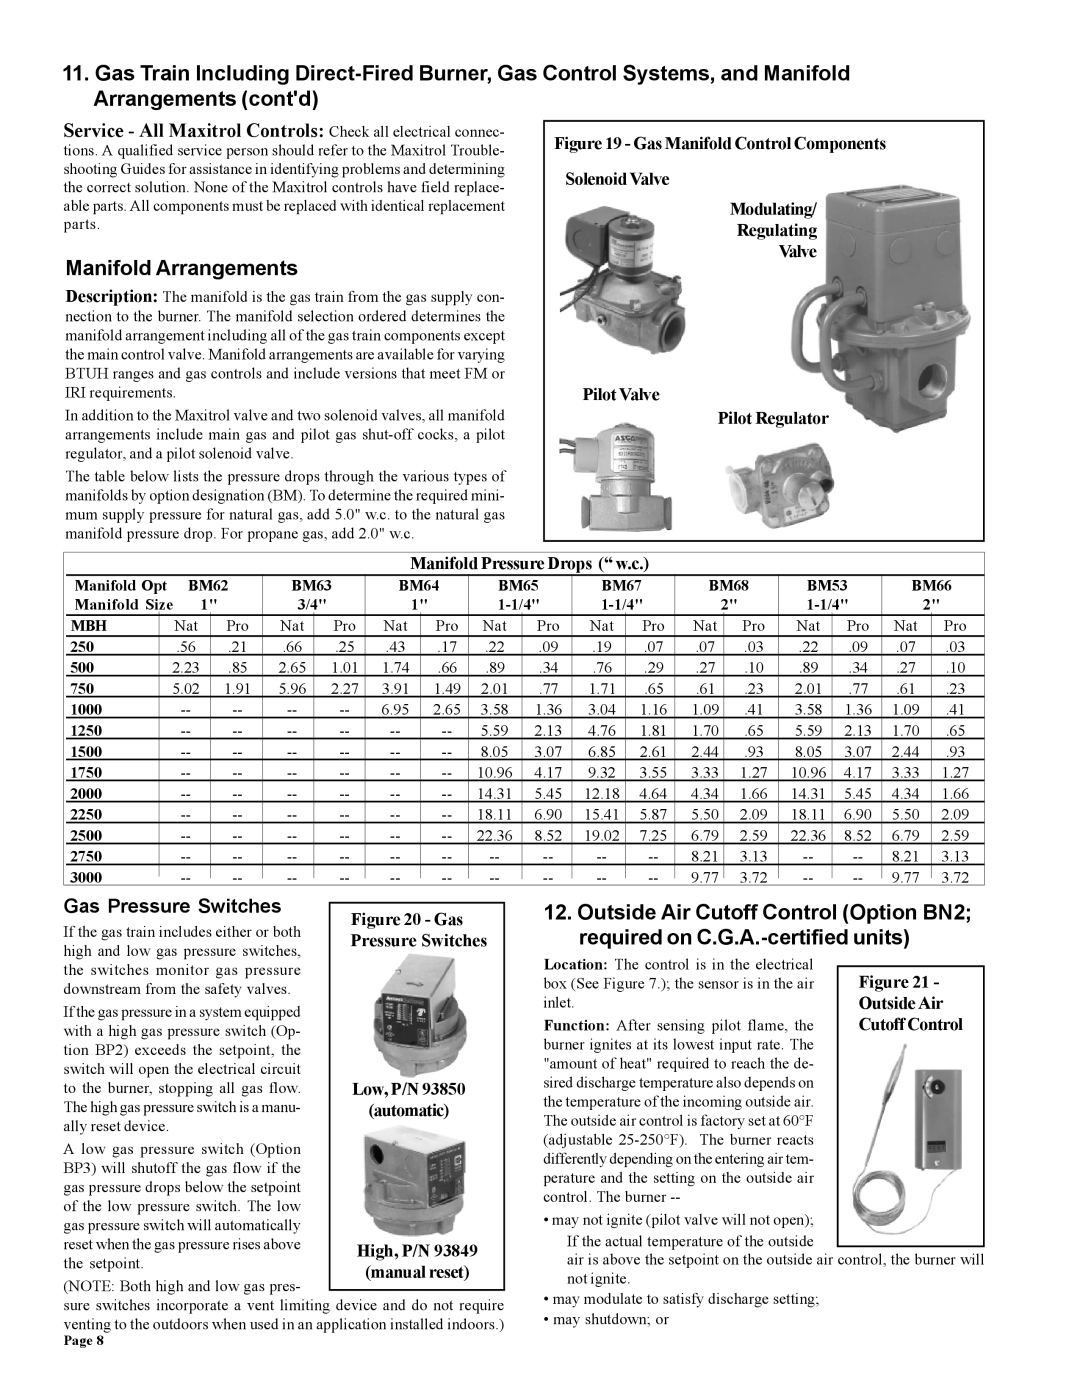 Thomas & Betts RZ-NA 441-OMS installation manual Manifold Arrangements 